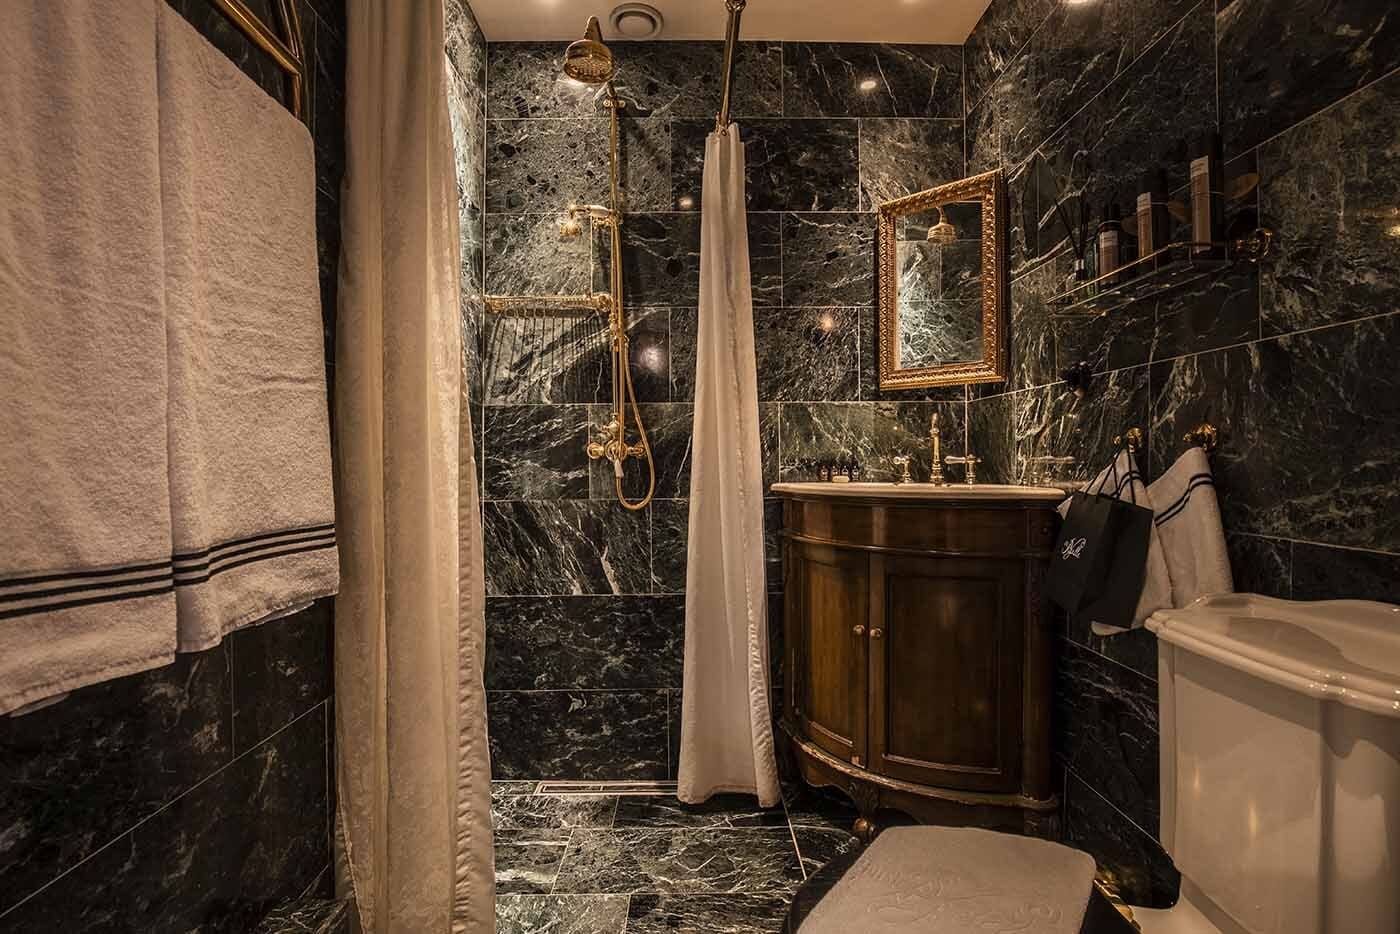 https://homeofess.com/se/pub_docs/files/FarfromtheordinaryfromPigalle/hotel-pigalle-suite-belle-bath.jpeg